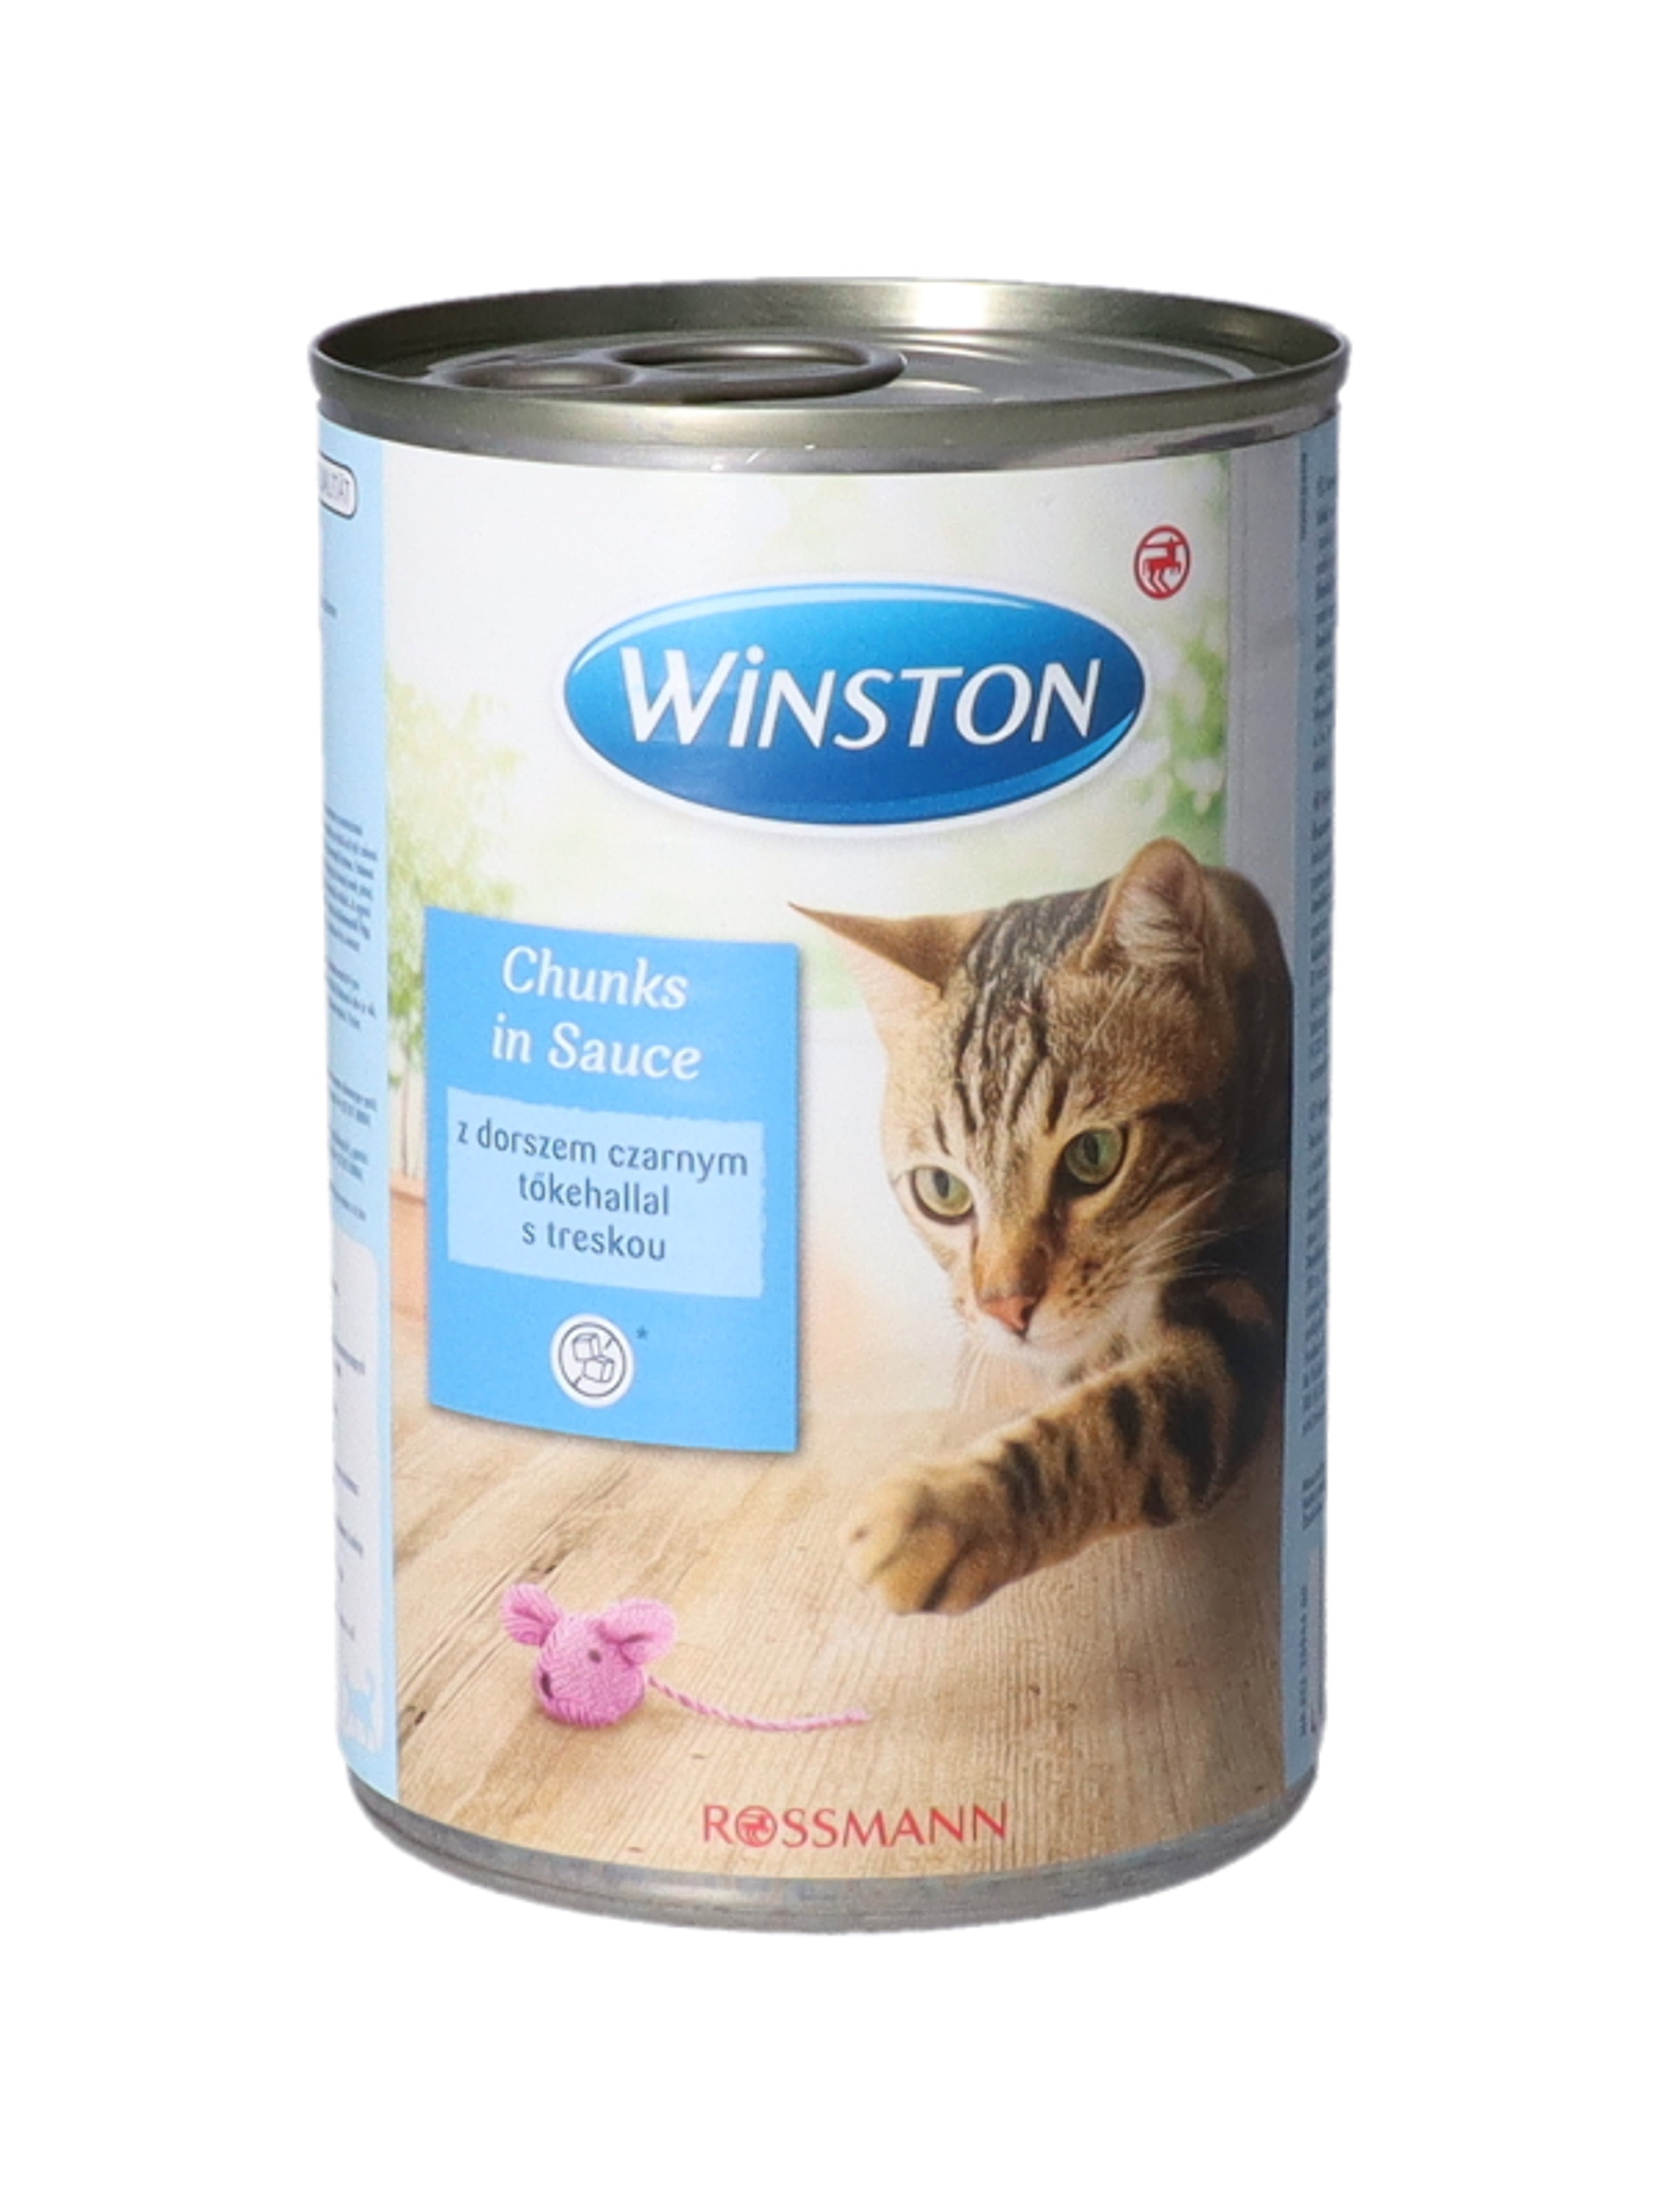 Winston konzerv macskáknak, lazaccal - 400 g-3